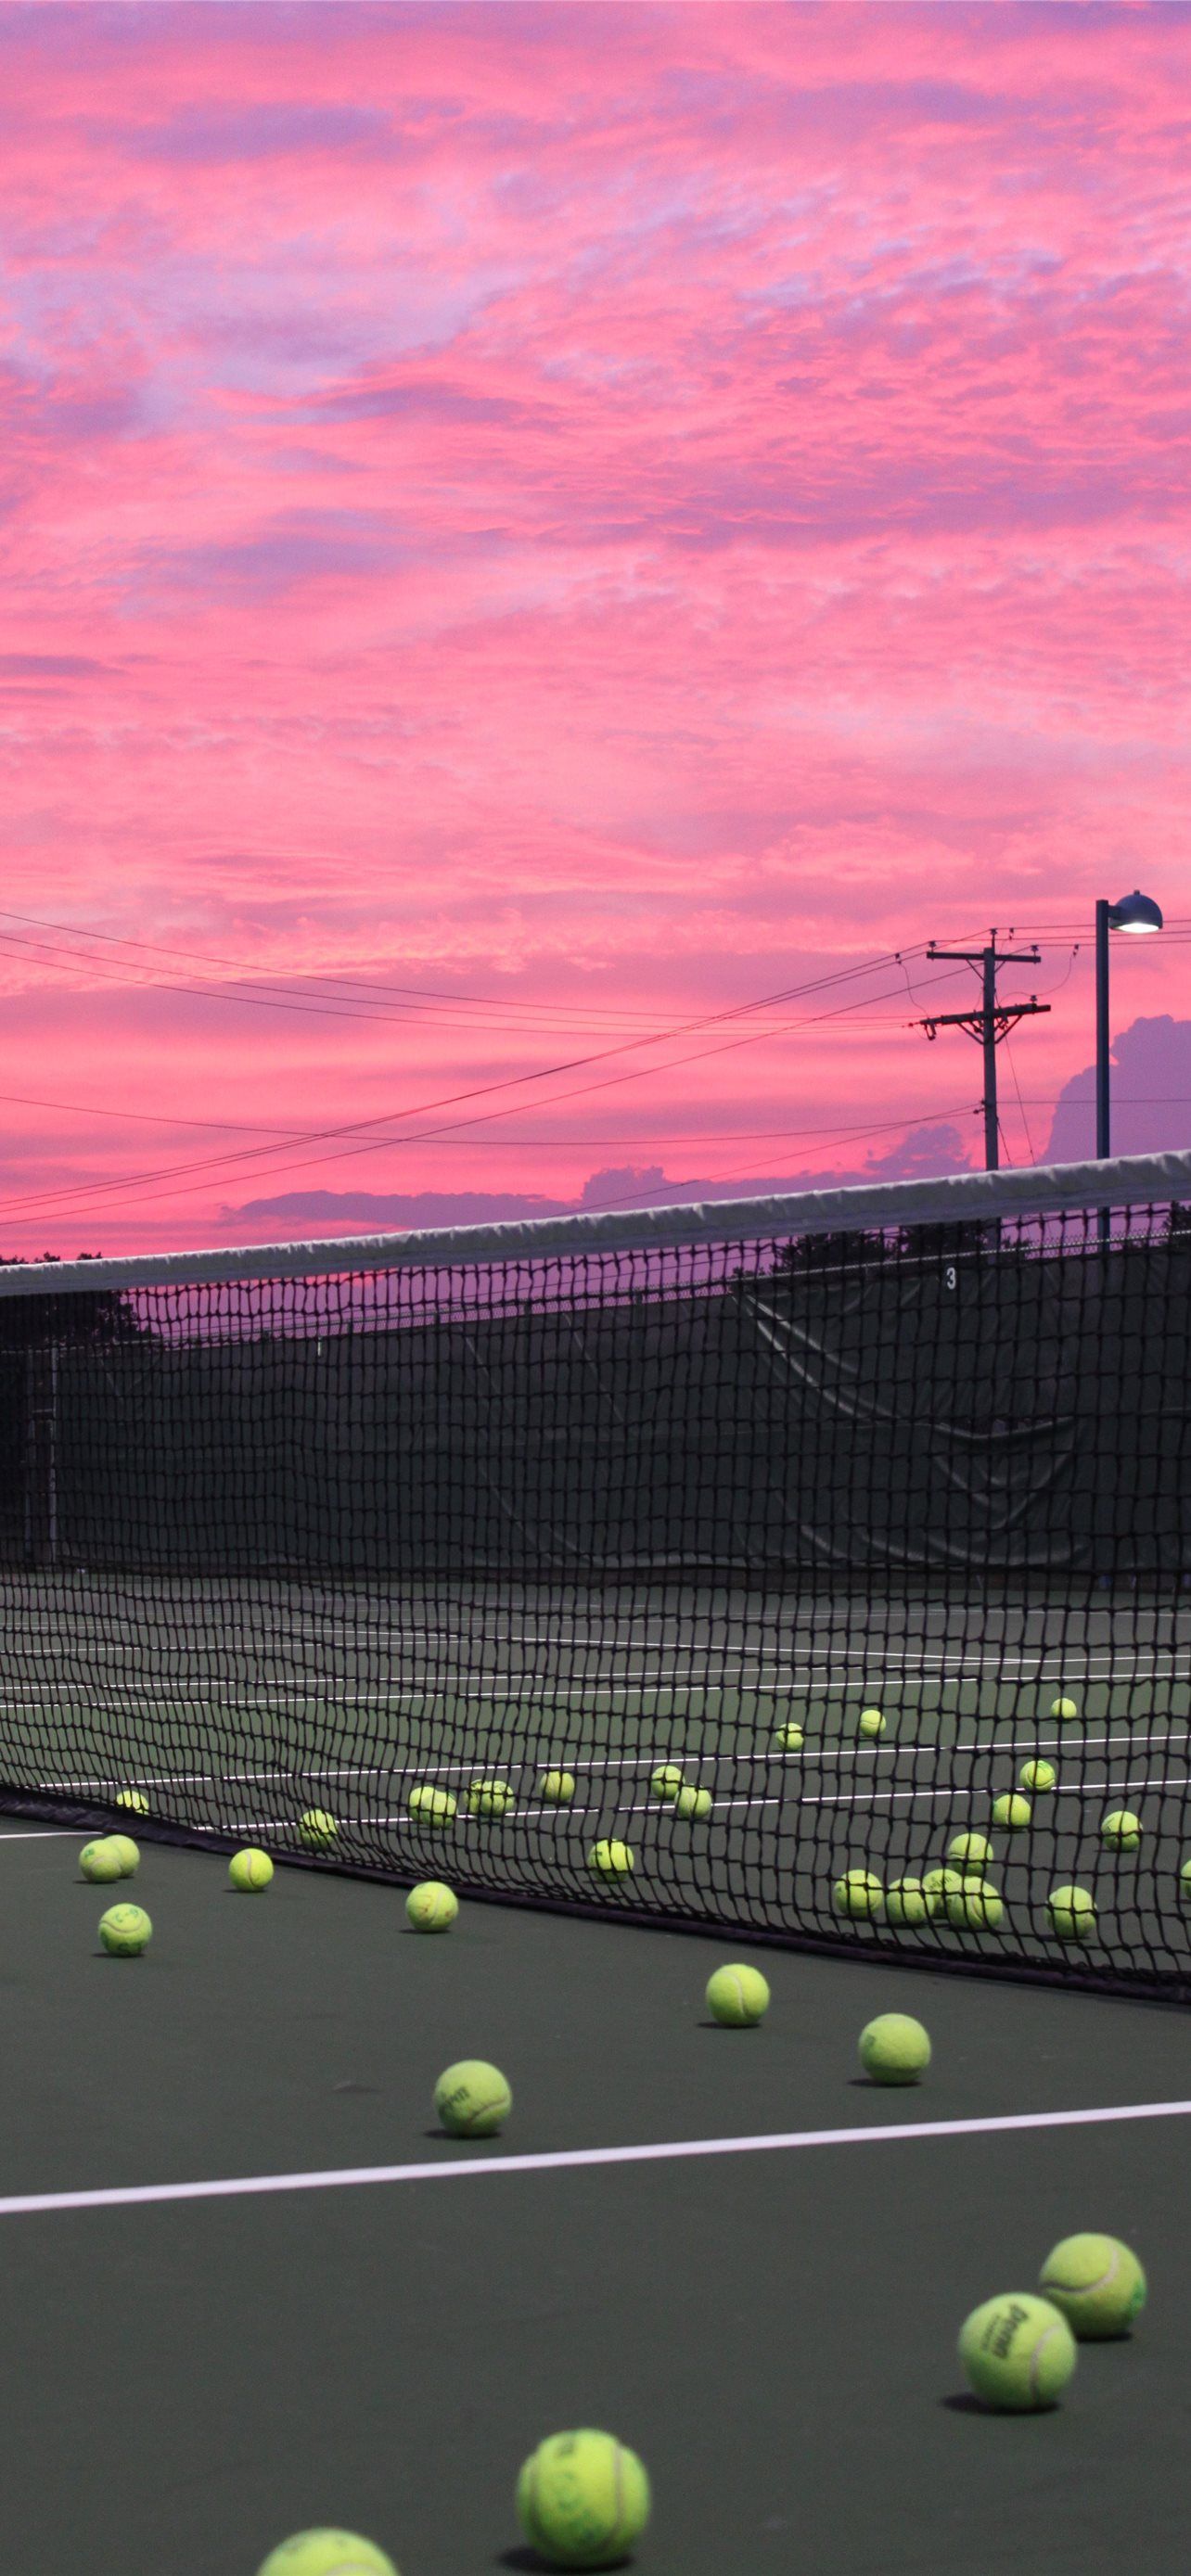 Tennis balls on a tennis court with a pink sky - Tennis